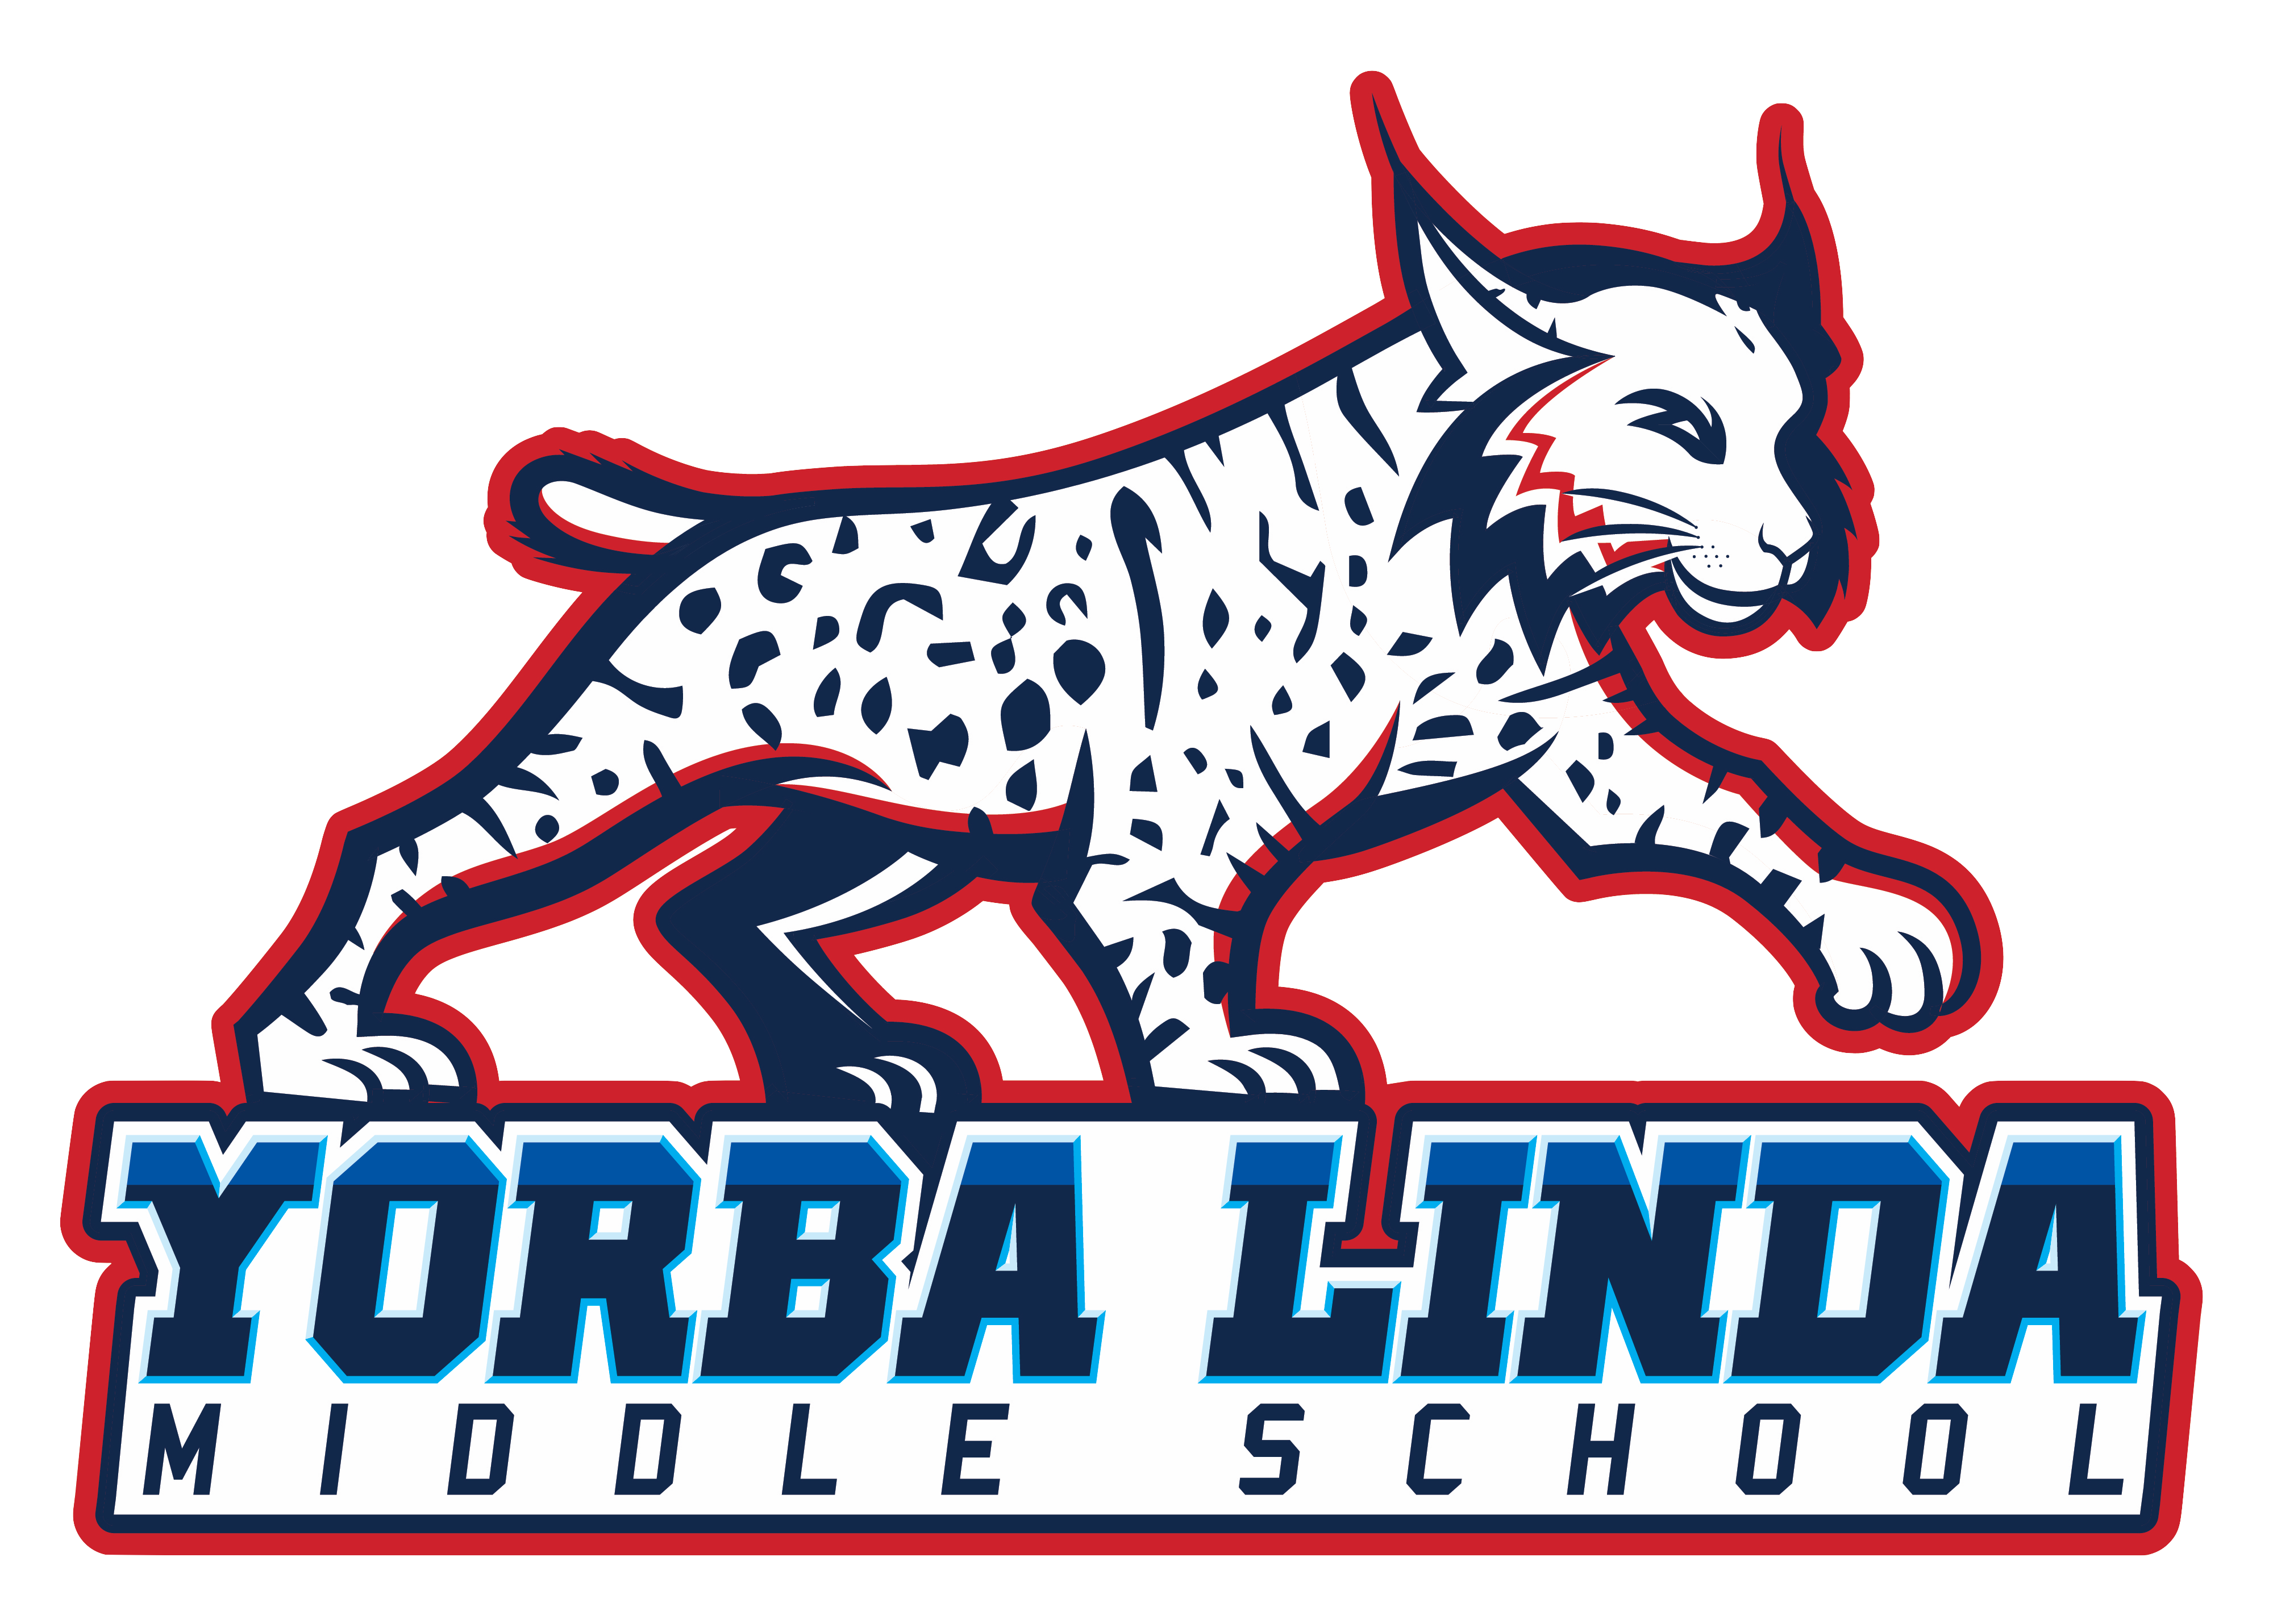 Yorba Linda Middle School